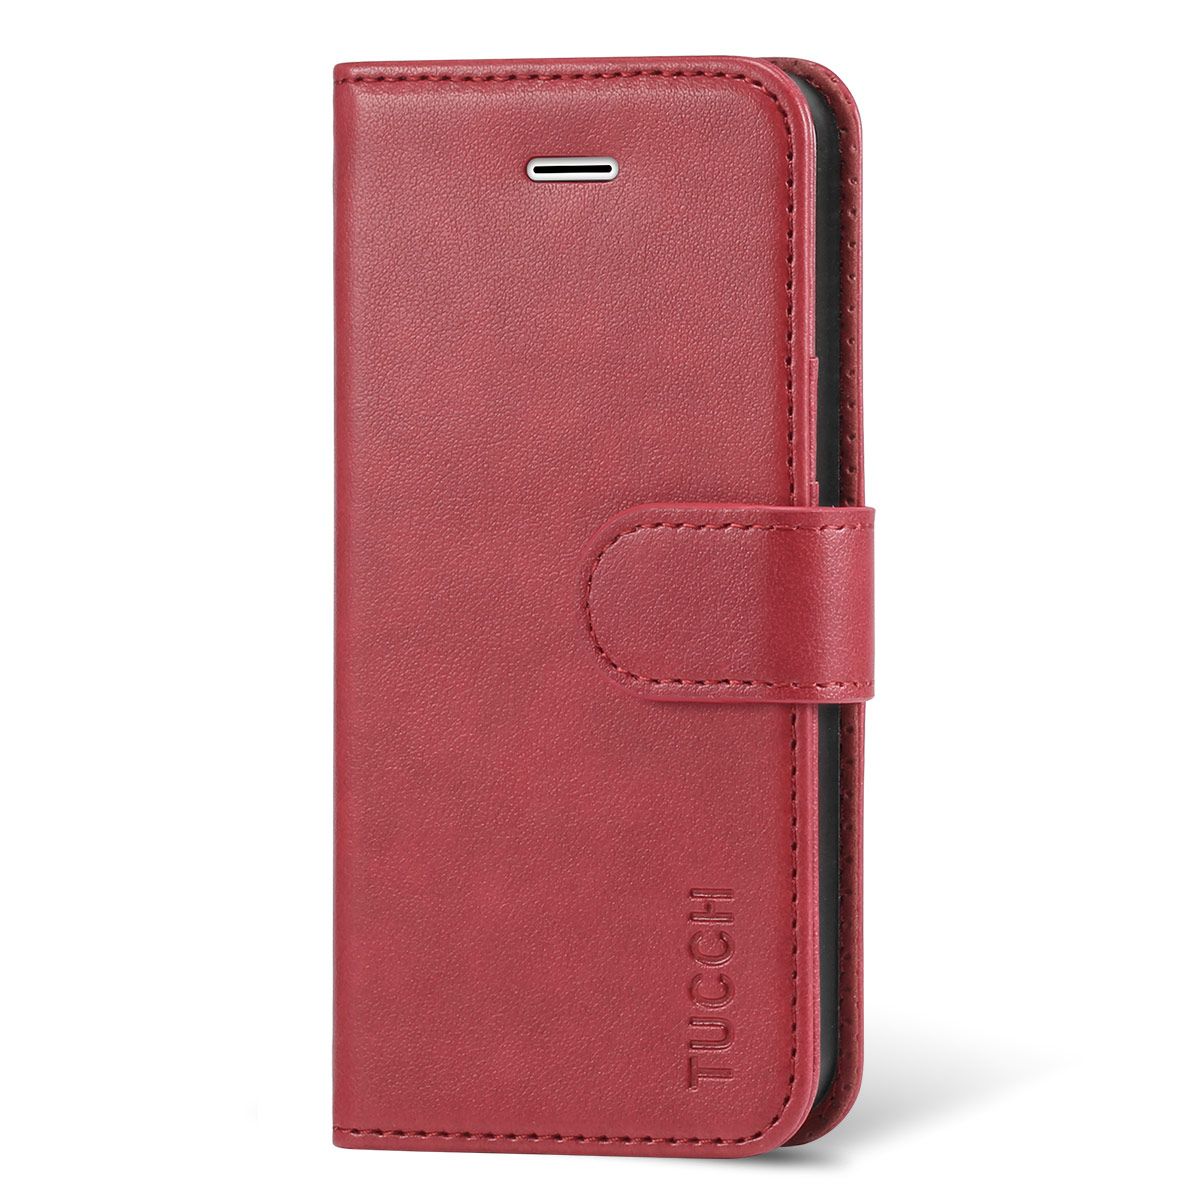 draai gids blozen TUCCH Flip Leather Wallet Case, Magnetic Closure for iPhone SE/5S/5